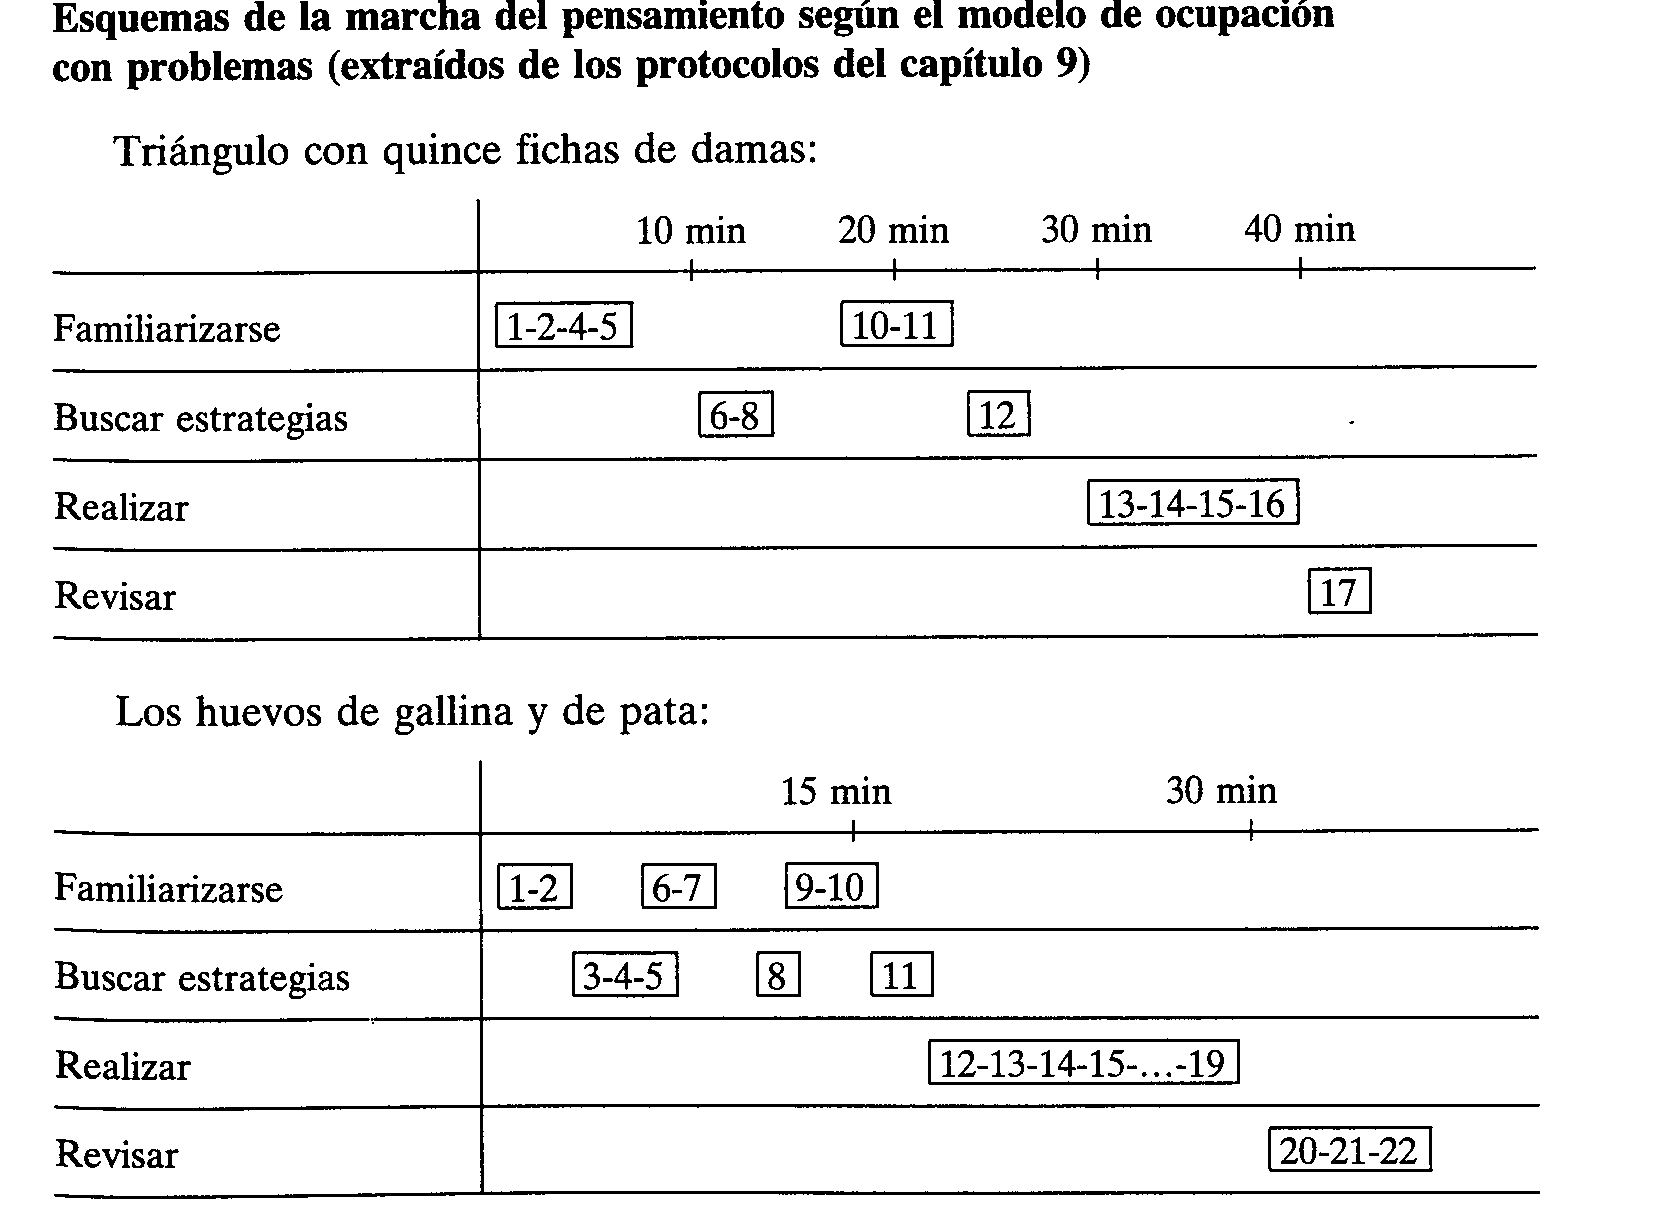 Graphics (p.3-5)